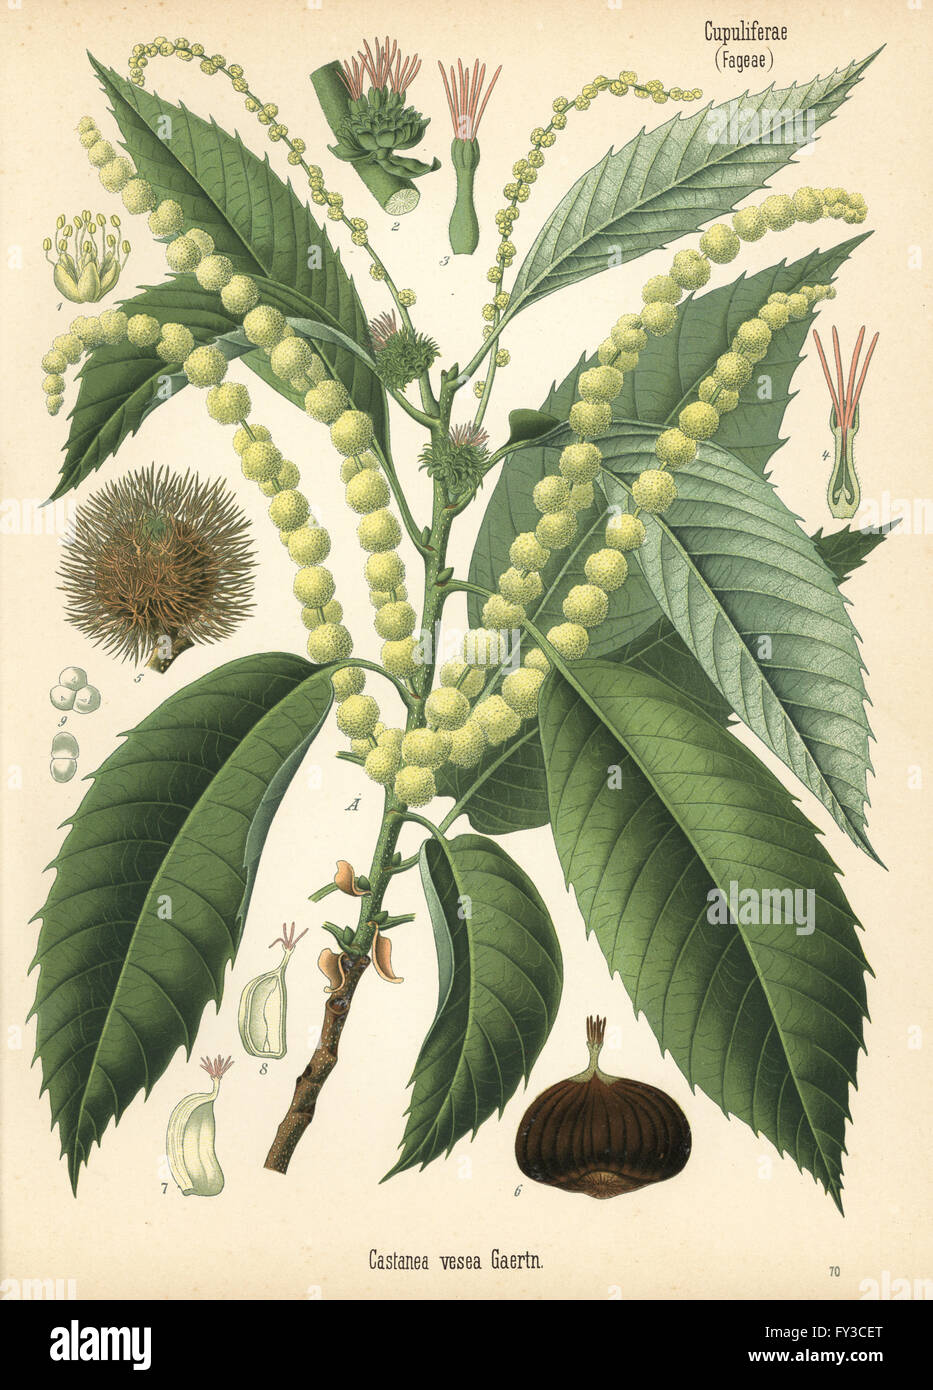 Sweet chestnut, Castanea sativa (Castanea vesea). Chromolithograph after a botanical illustration from Hermann Adolph Koehler's Medicinal Plants, edited by Gustav Pabst, Koehler, Germany, 1887. Stock Photo